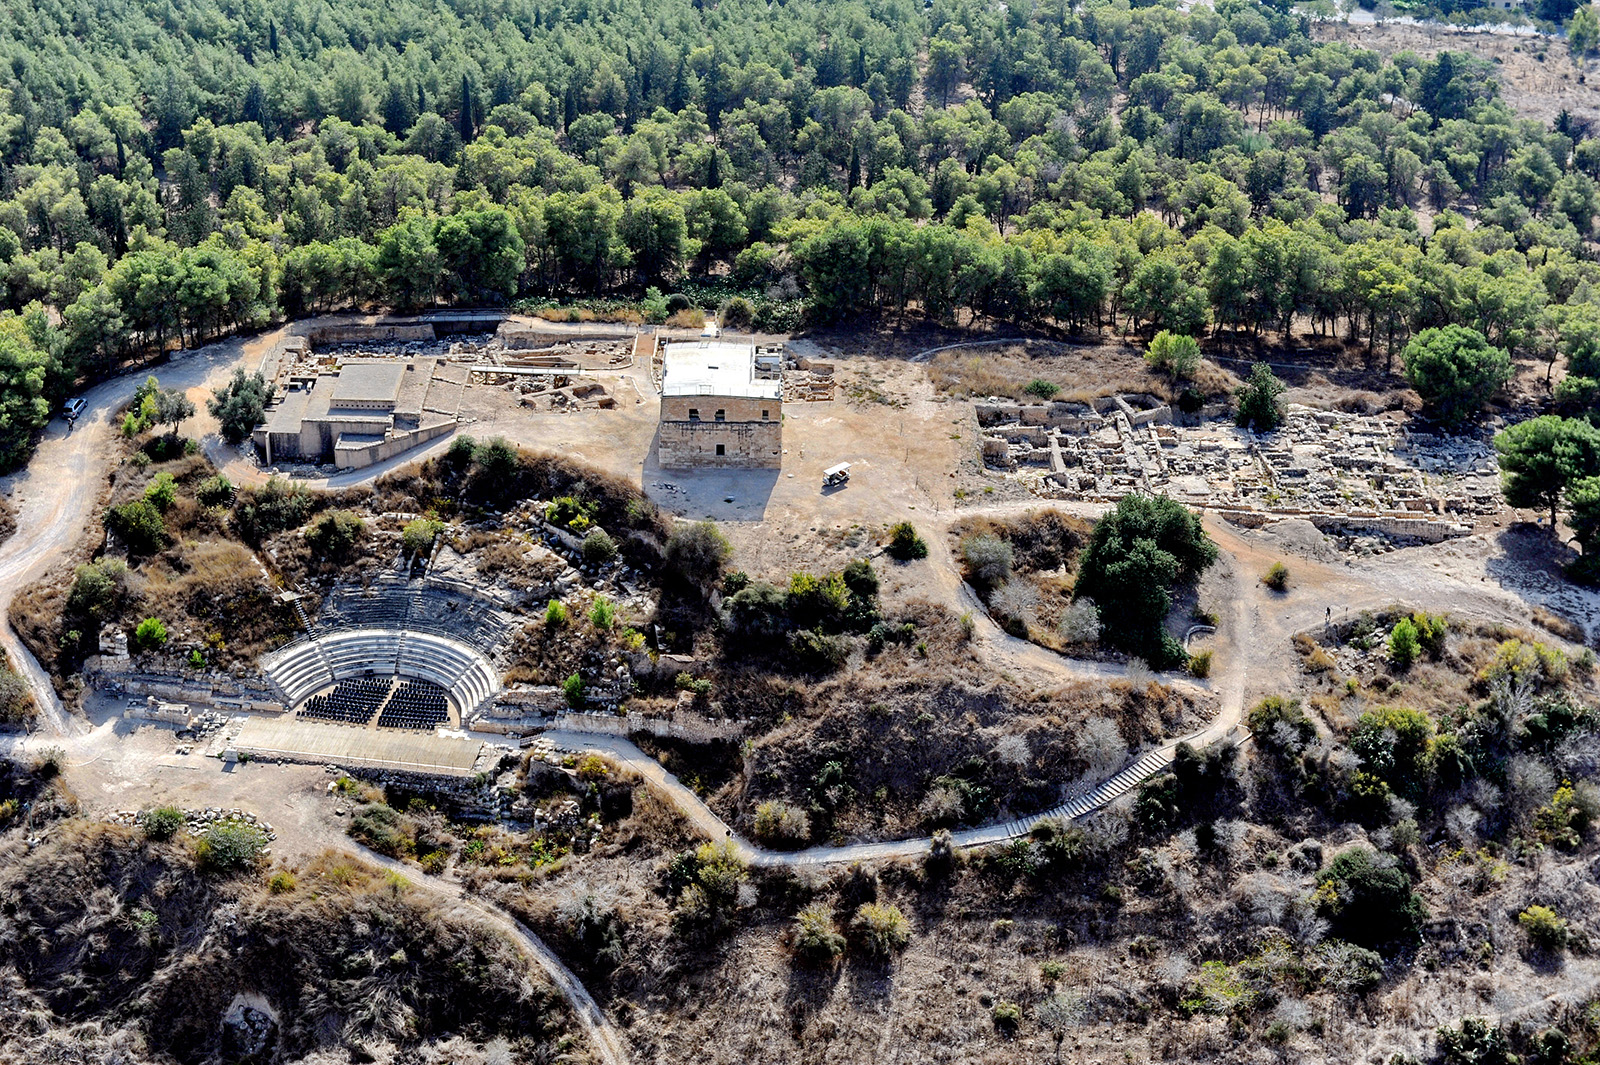 Aerial view of Sepphoris, Galilee, Israel, showing the dig site